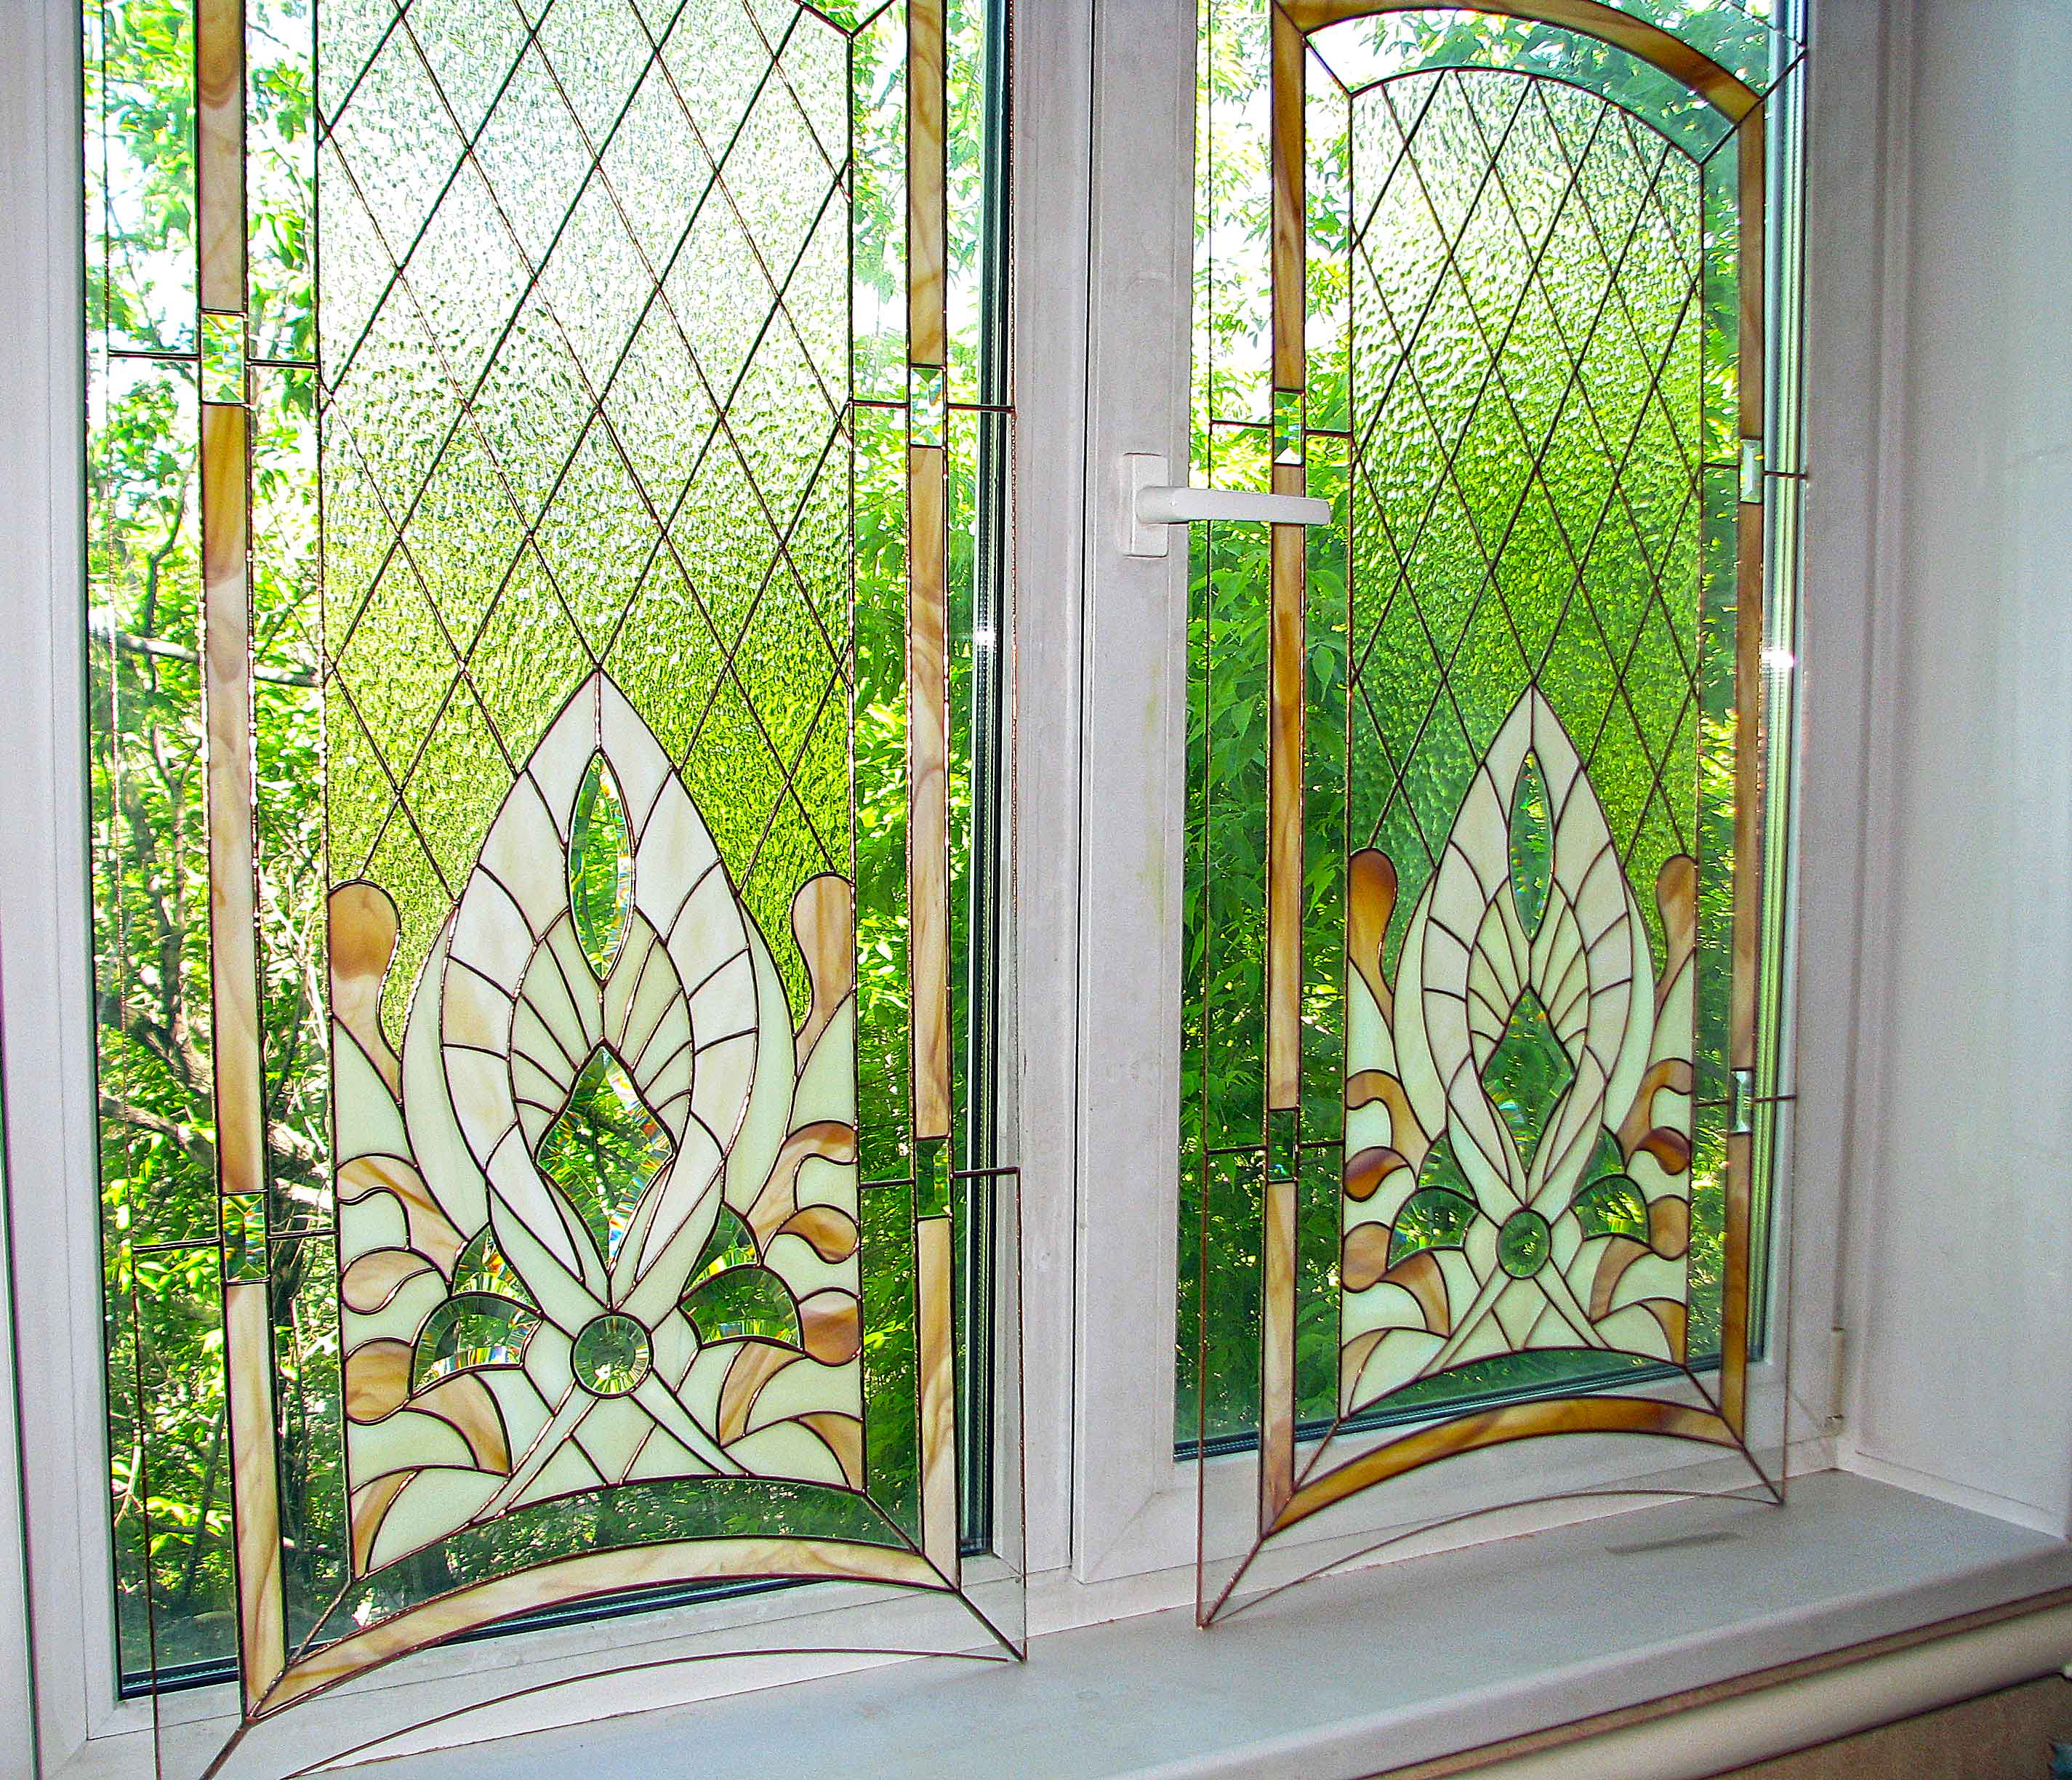 Decorating elements of windows